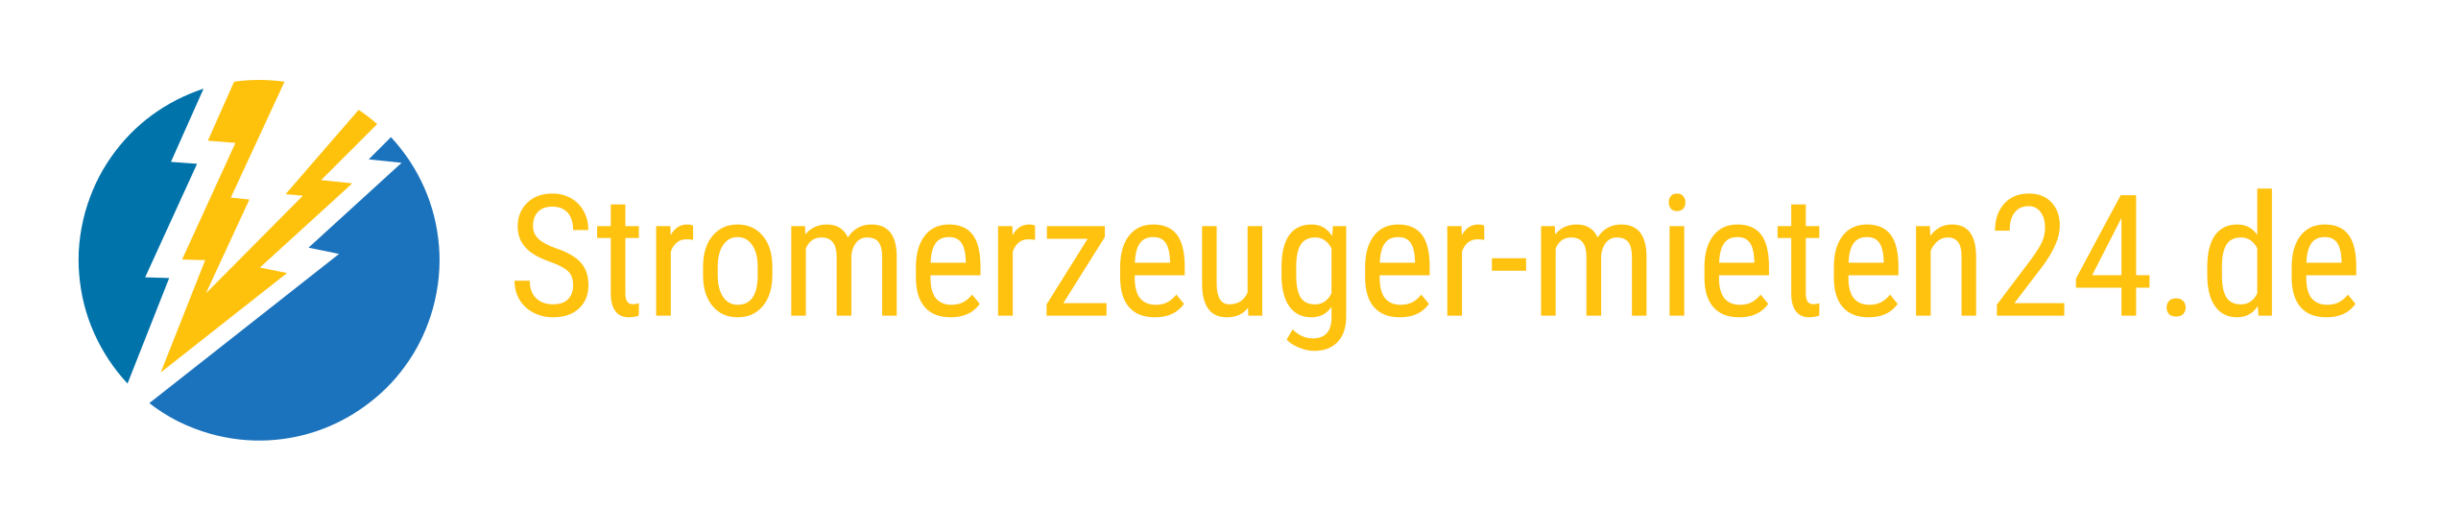 Stromerzeuger-mieten24.de